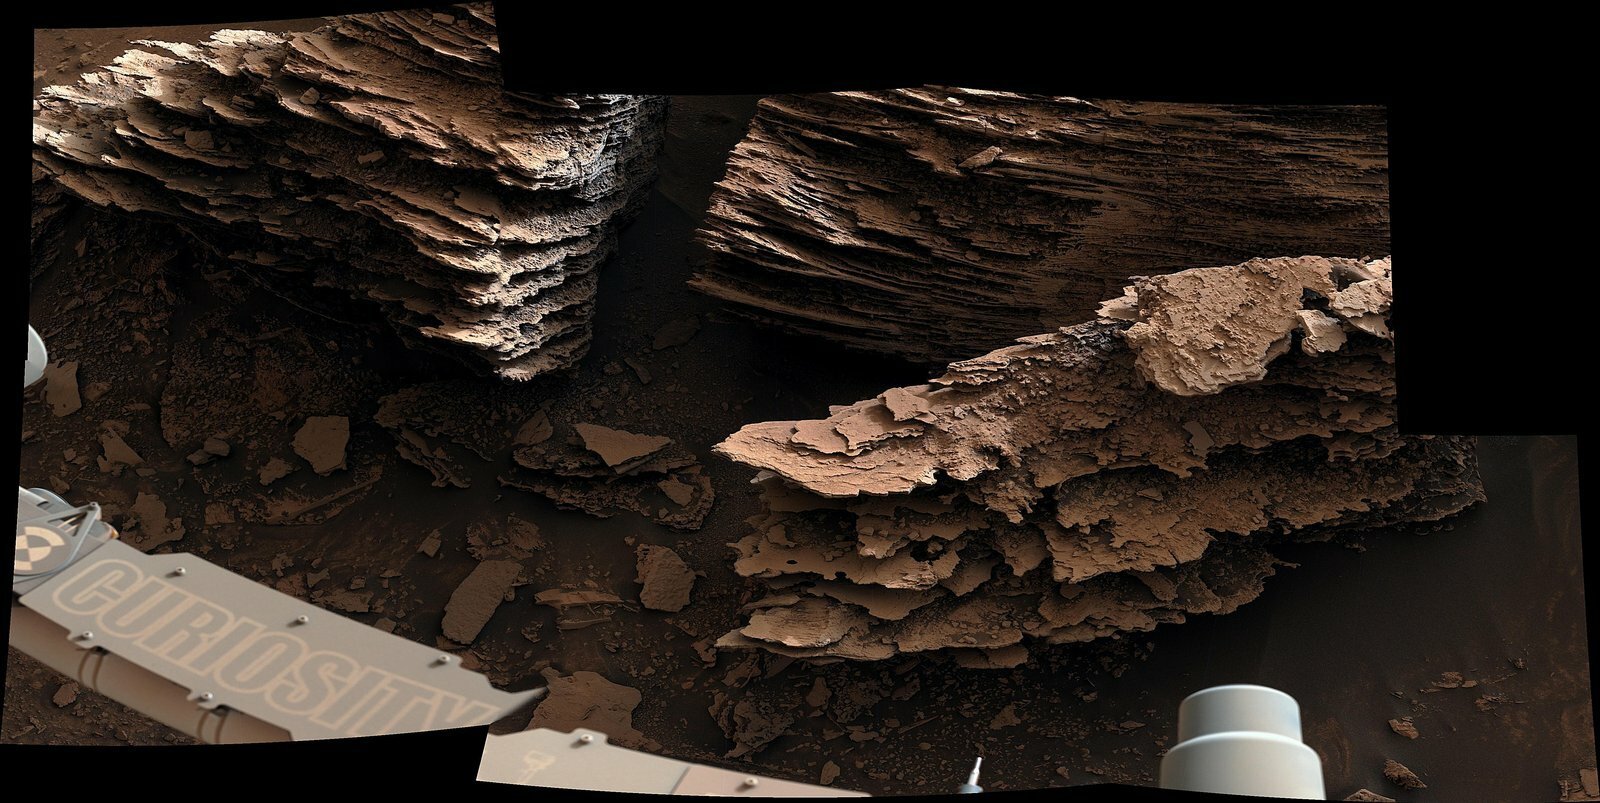 a layered rock on Mars